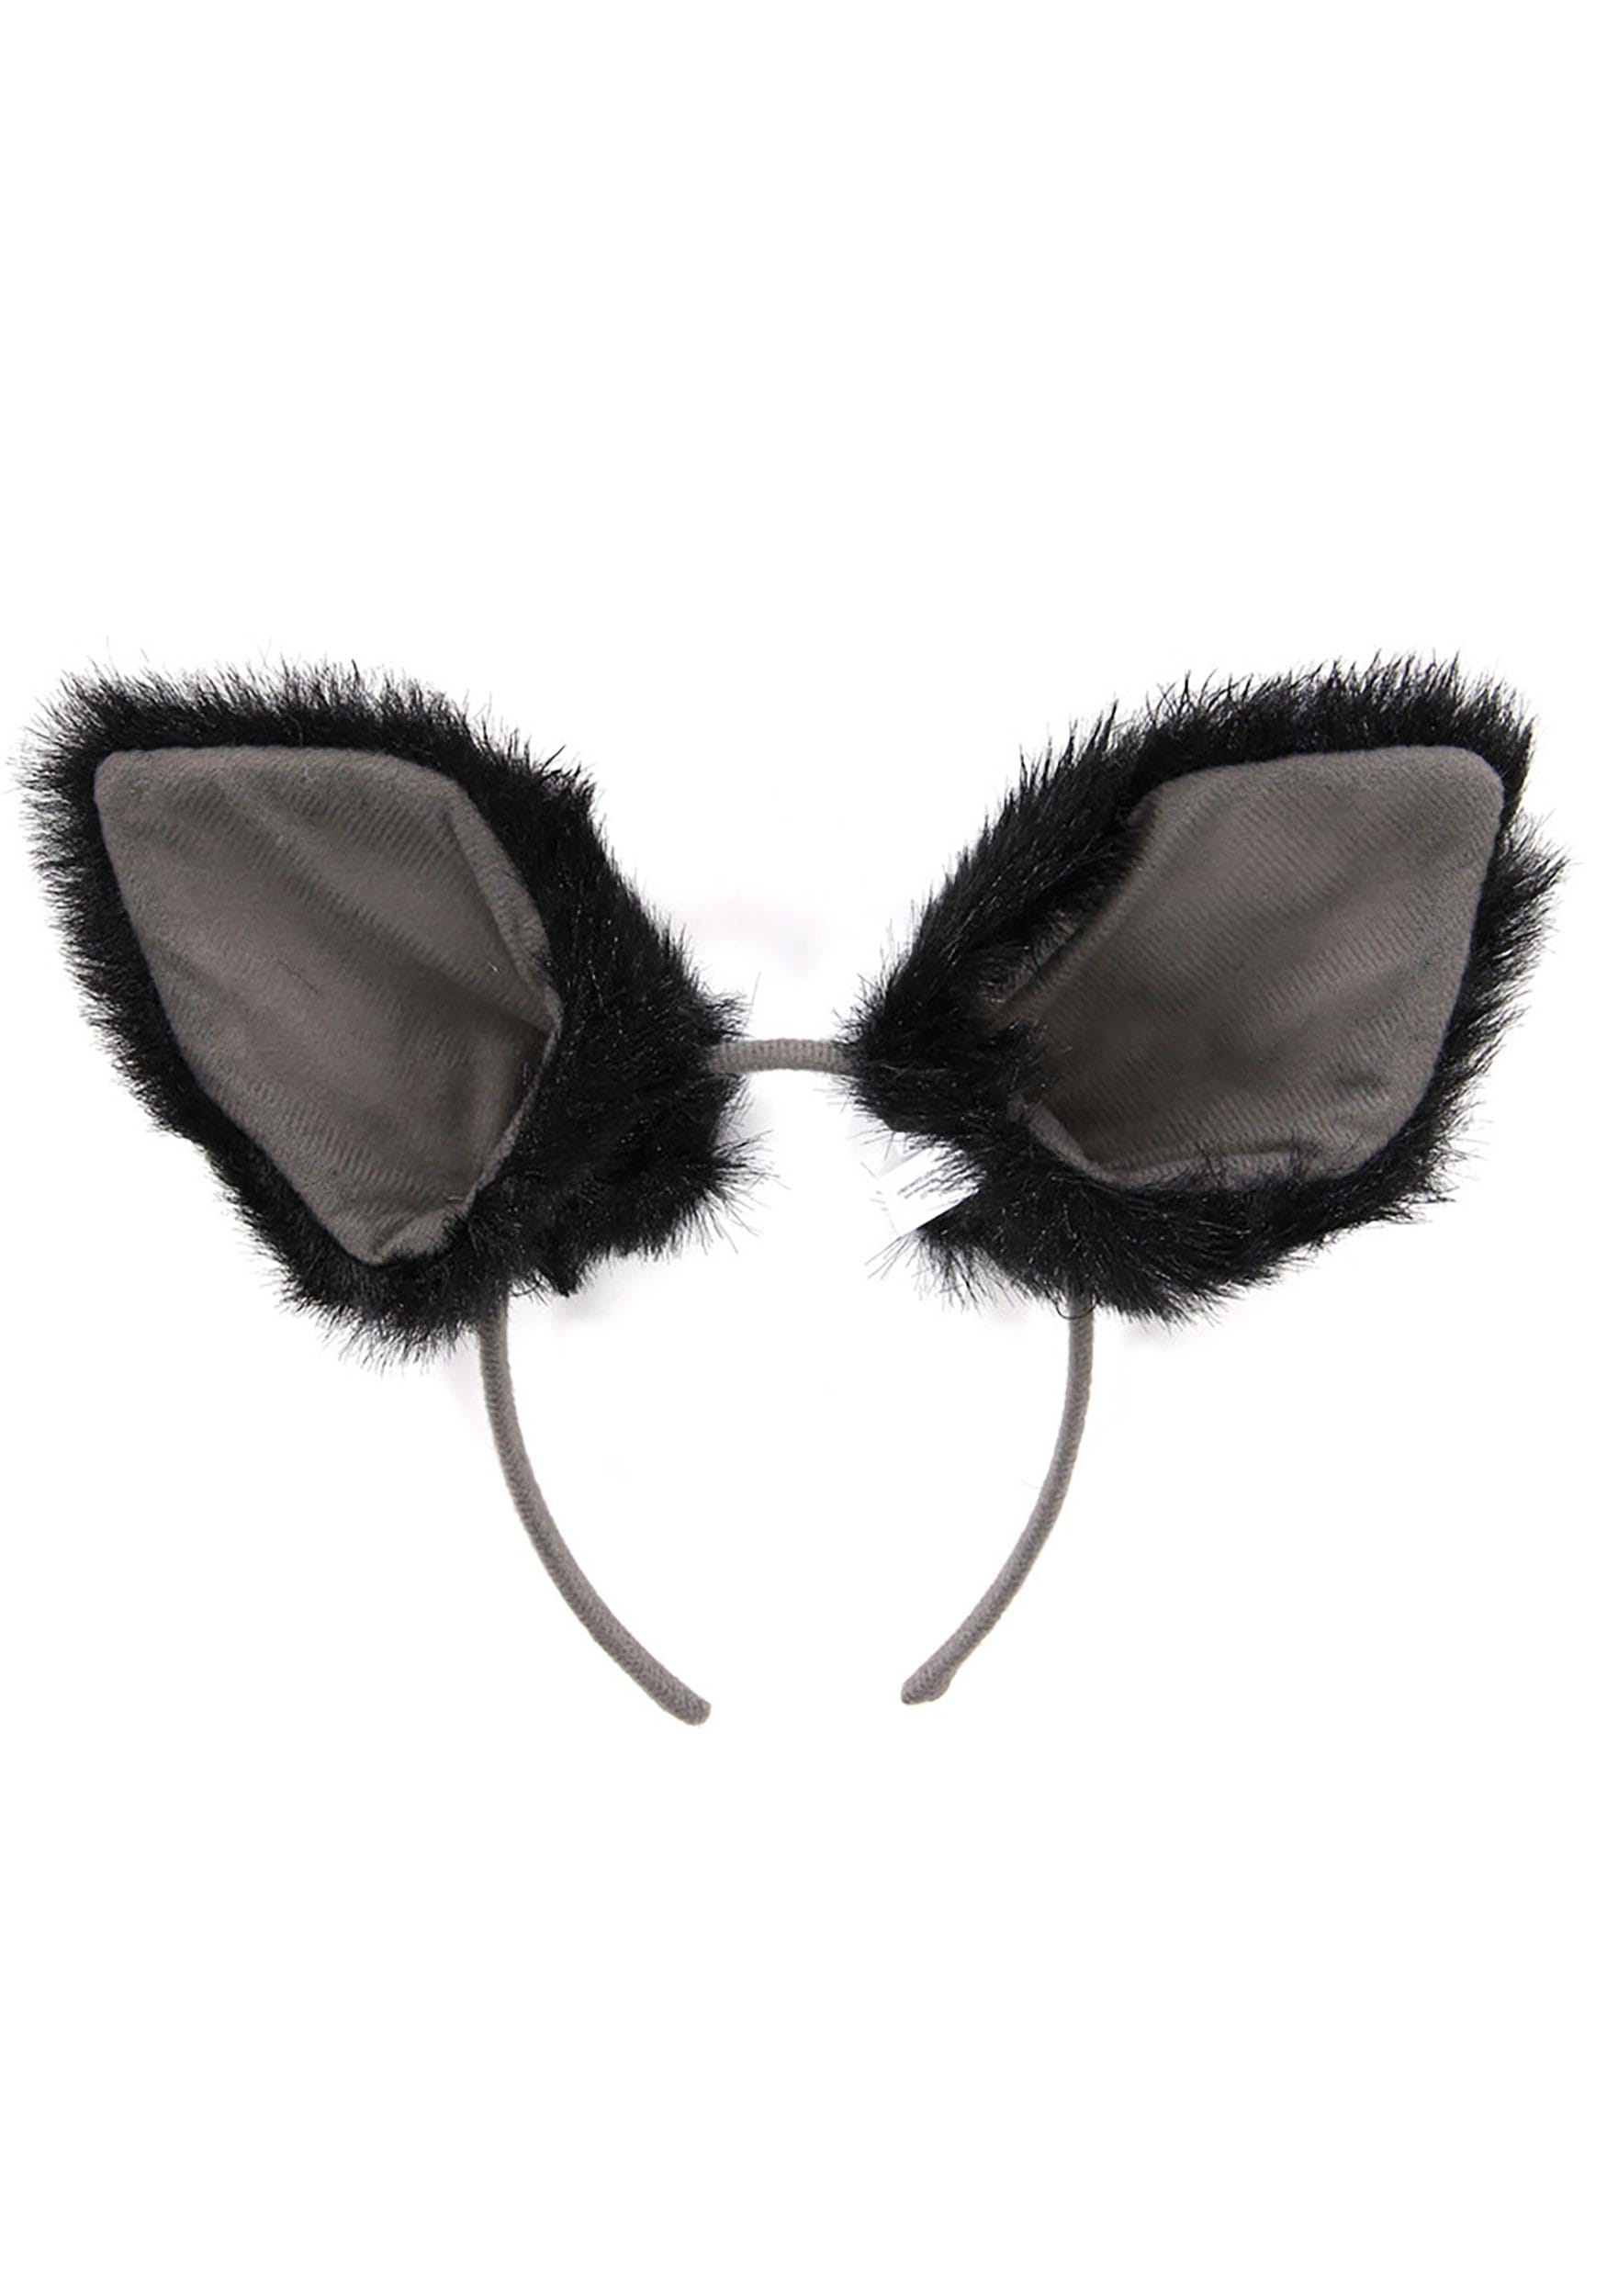 Deluxe Cat Ears Costume Headband